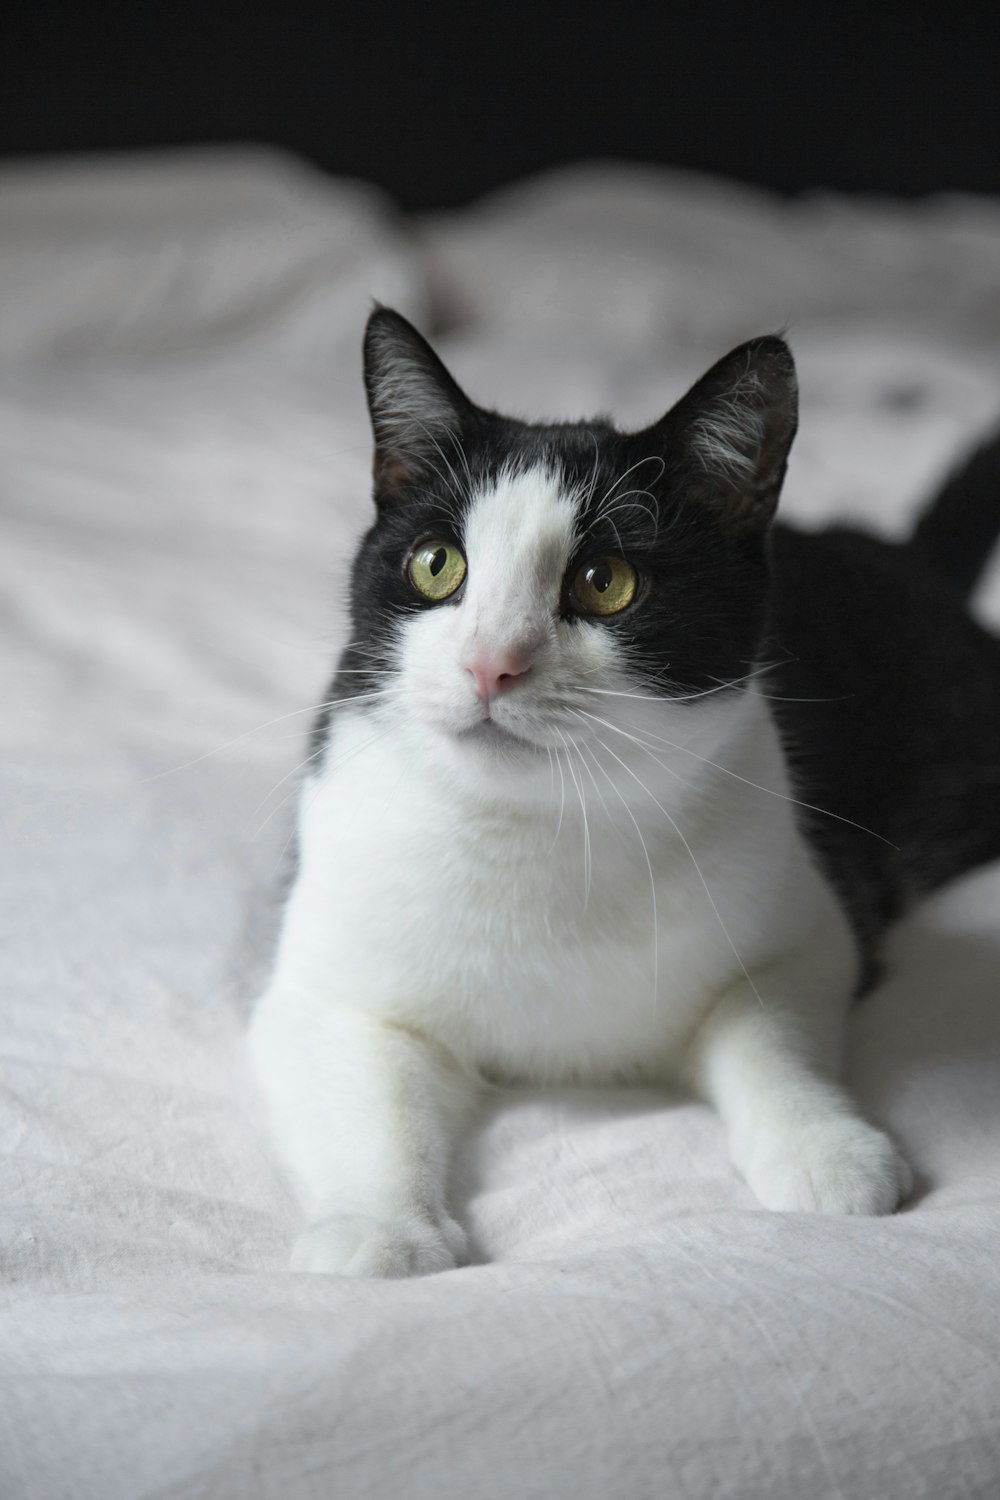 short-fur black and white cat on white mattress